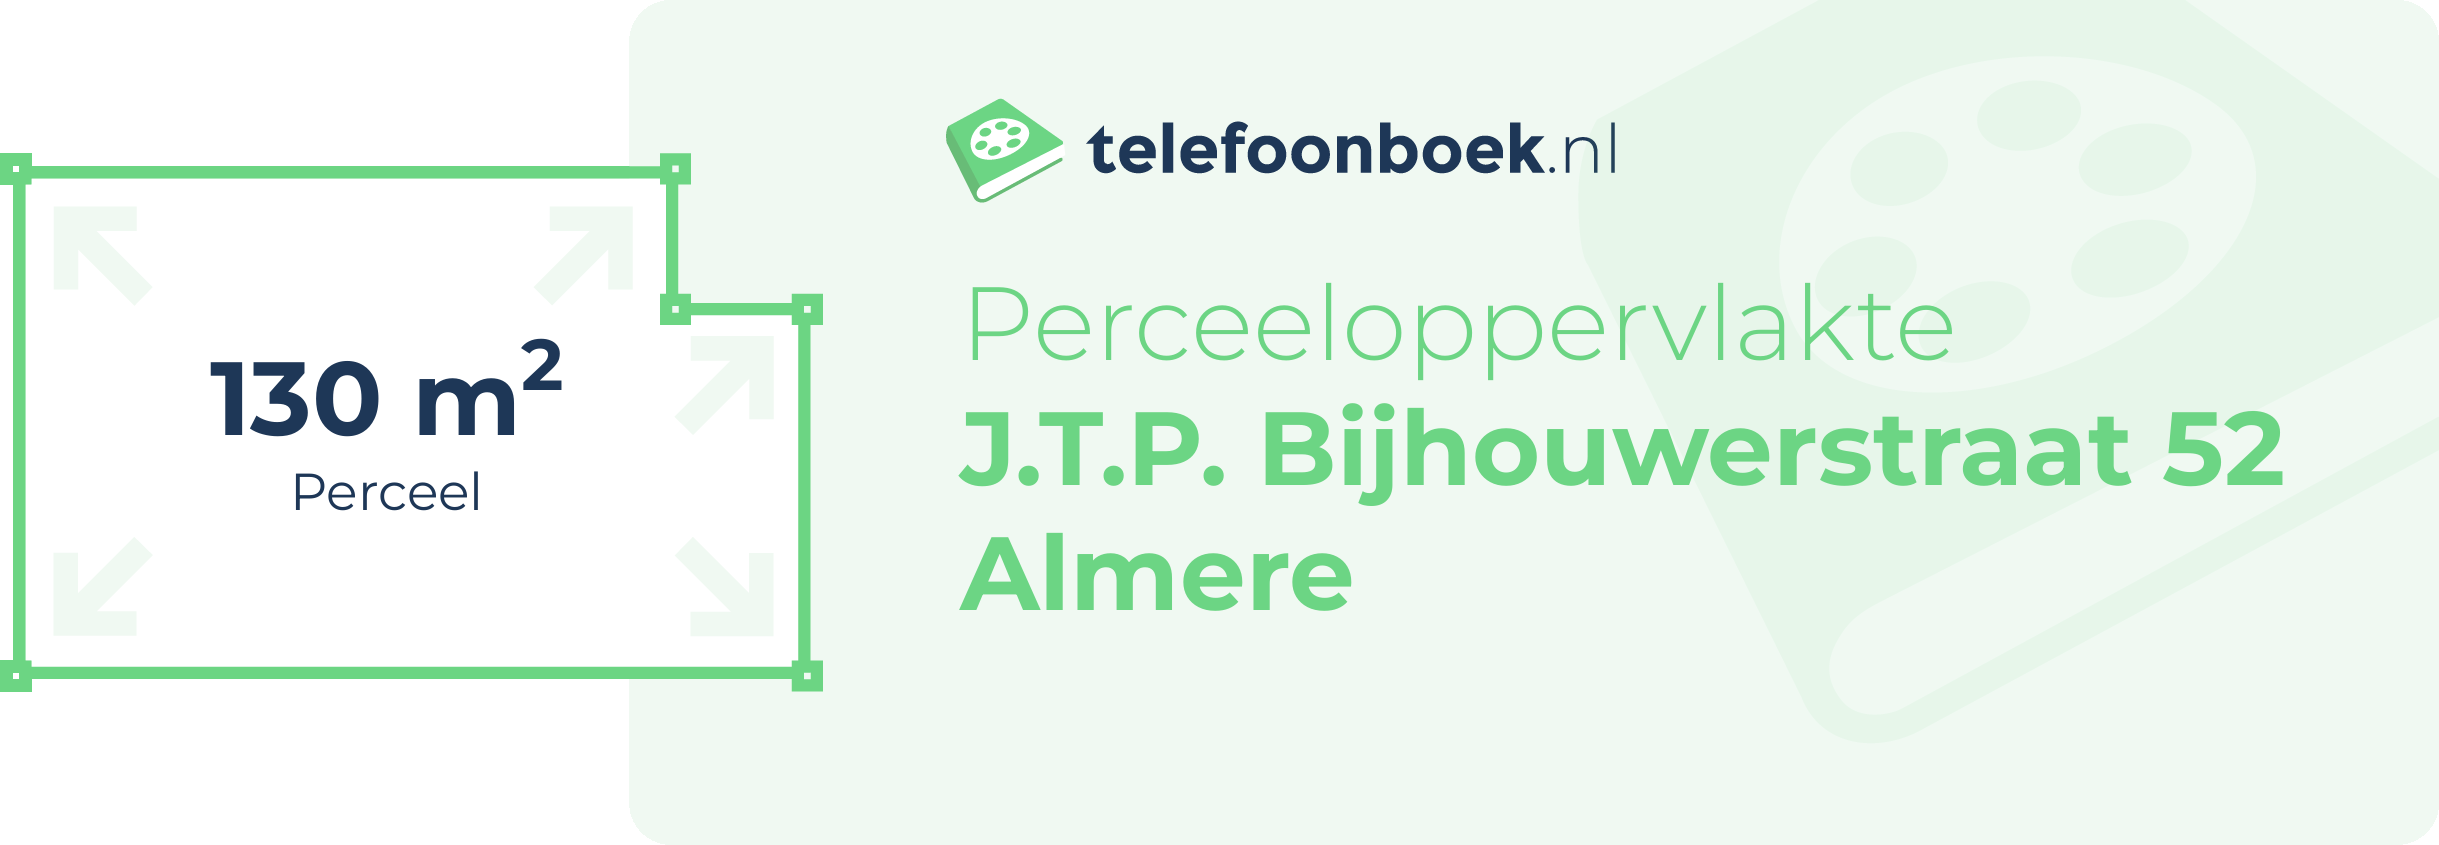 Perceeloppervlakte J.T.P. Bijhouwerstraat 52 Almere